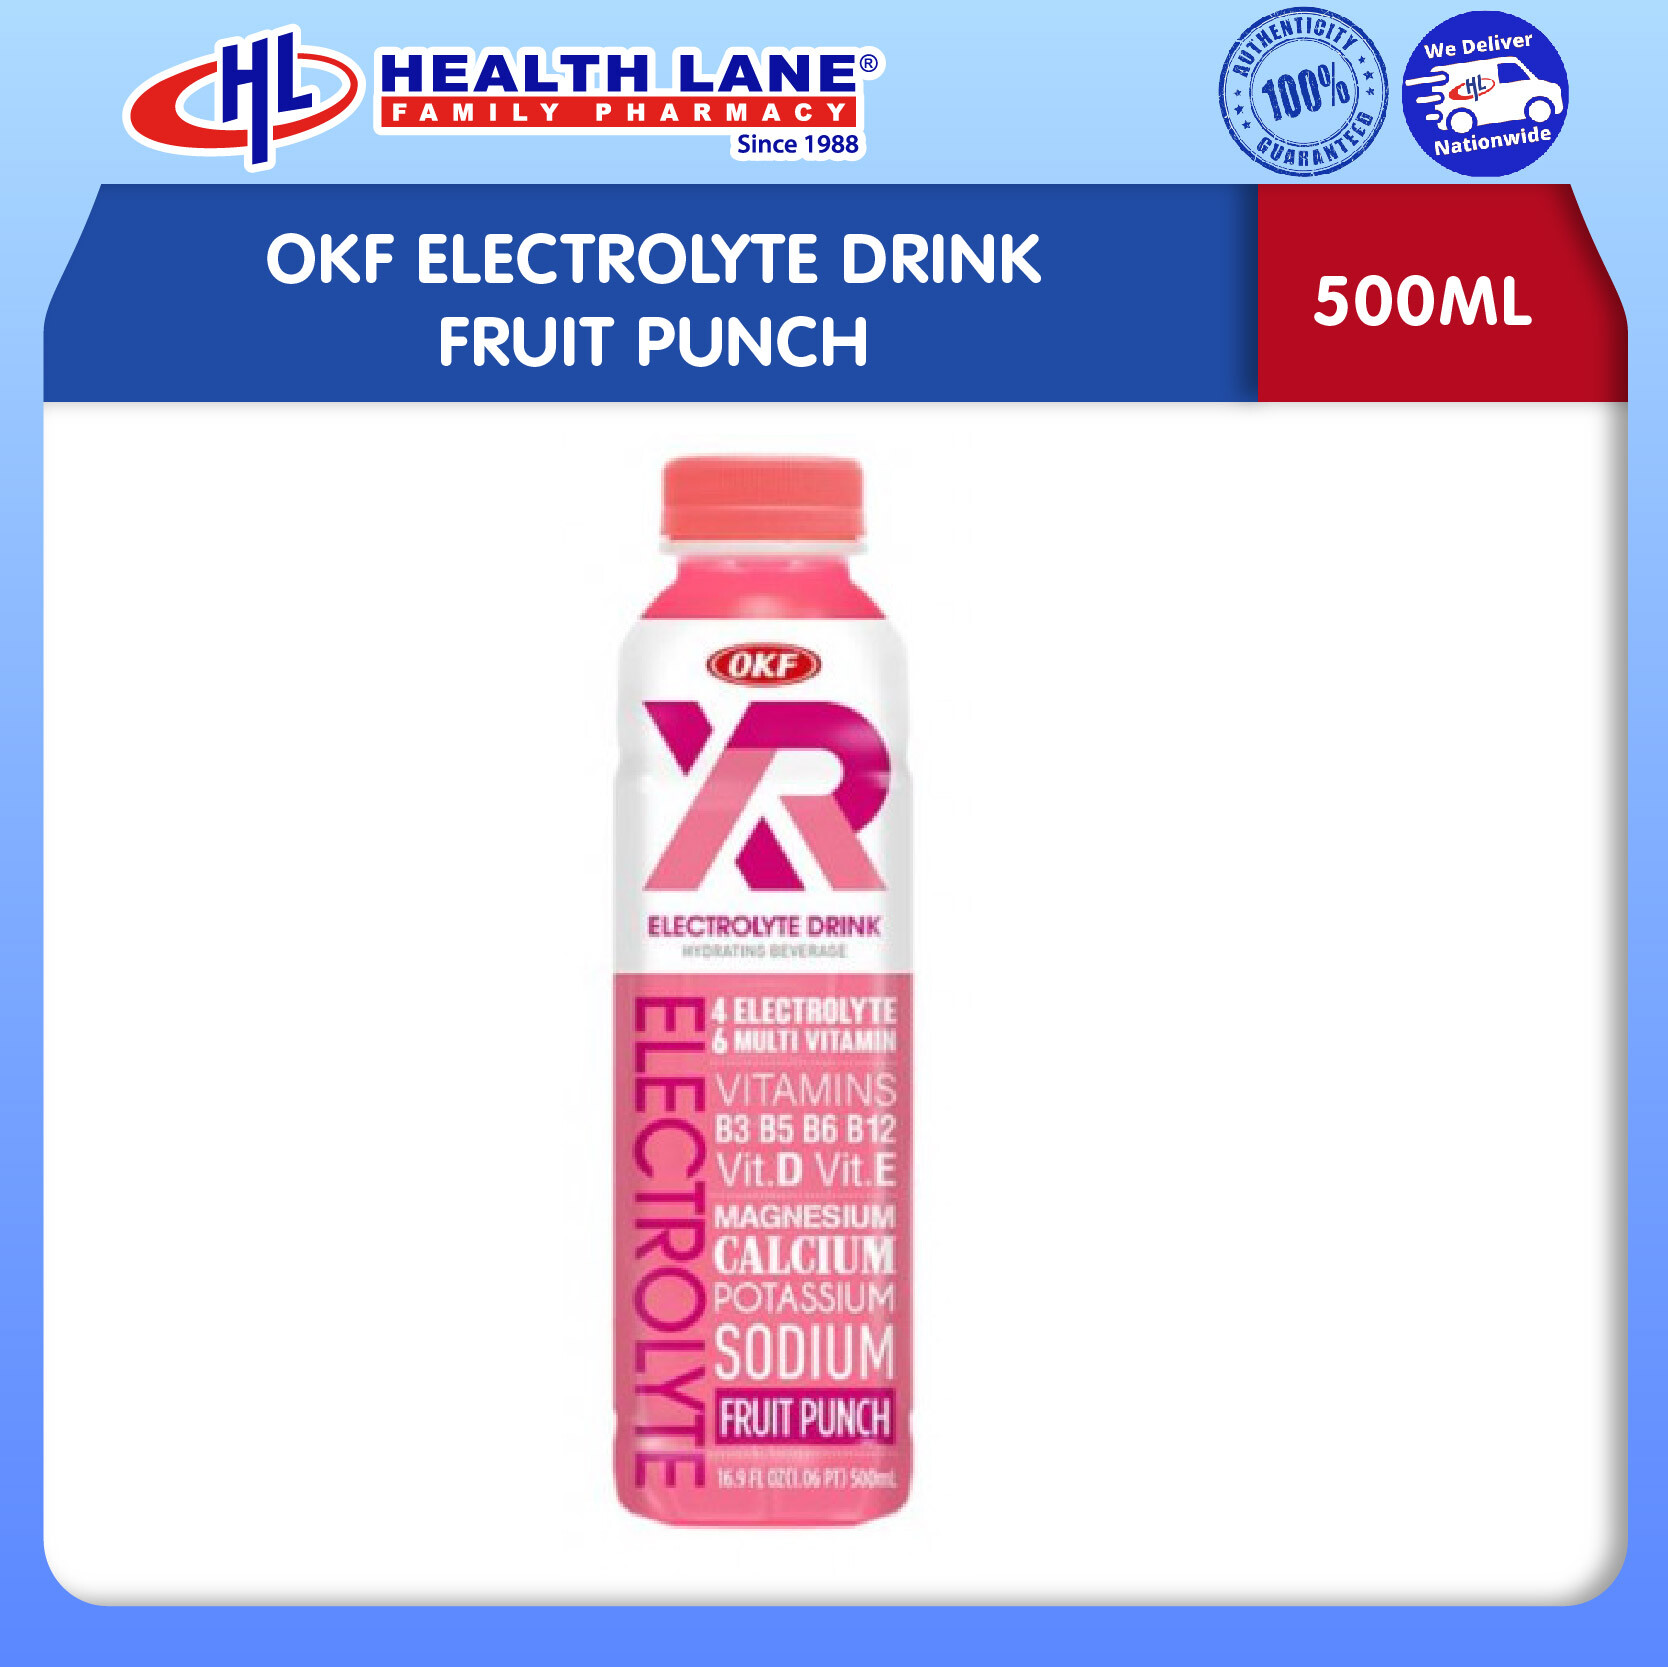 OKF ELECTROLYTE DRINK FRUIT PUNCH (500ML)